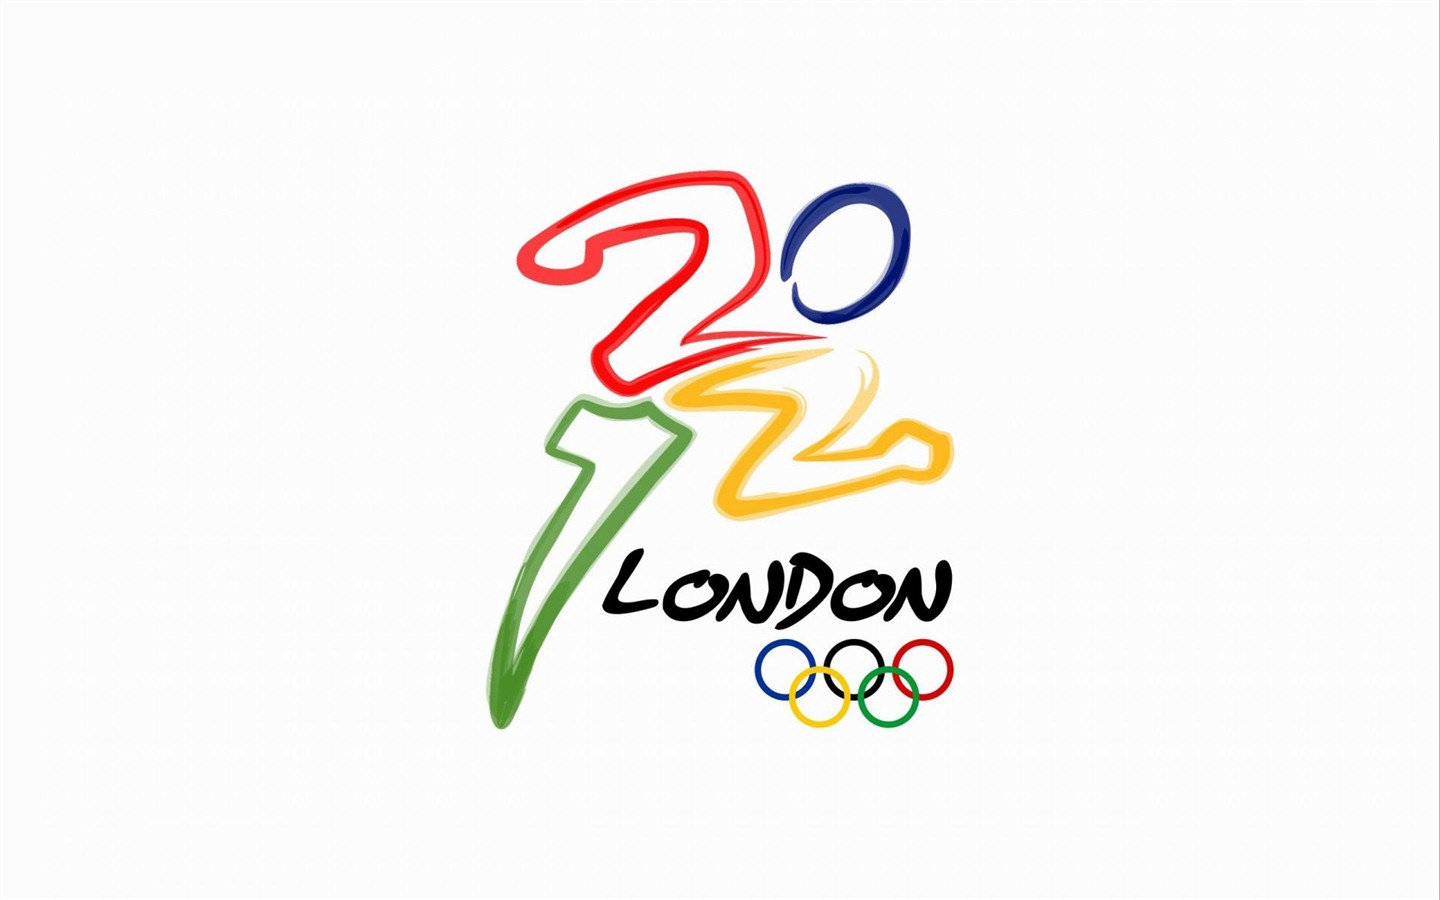 London 2012 Olympics theme wallpapers (2) #22 - 1440x900